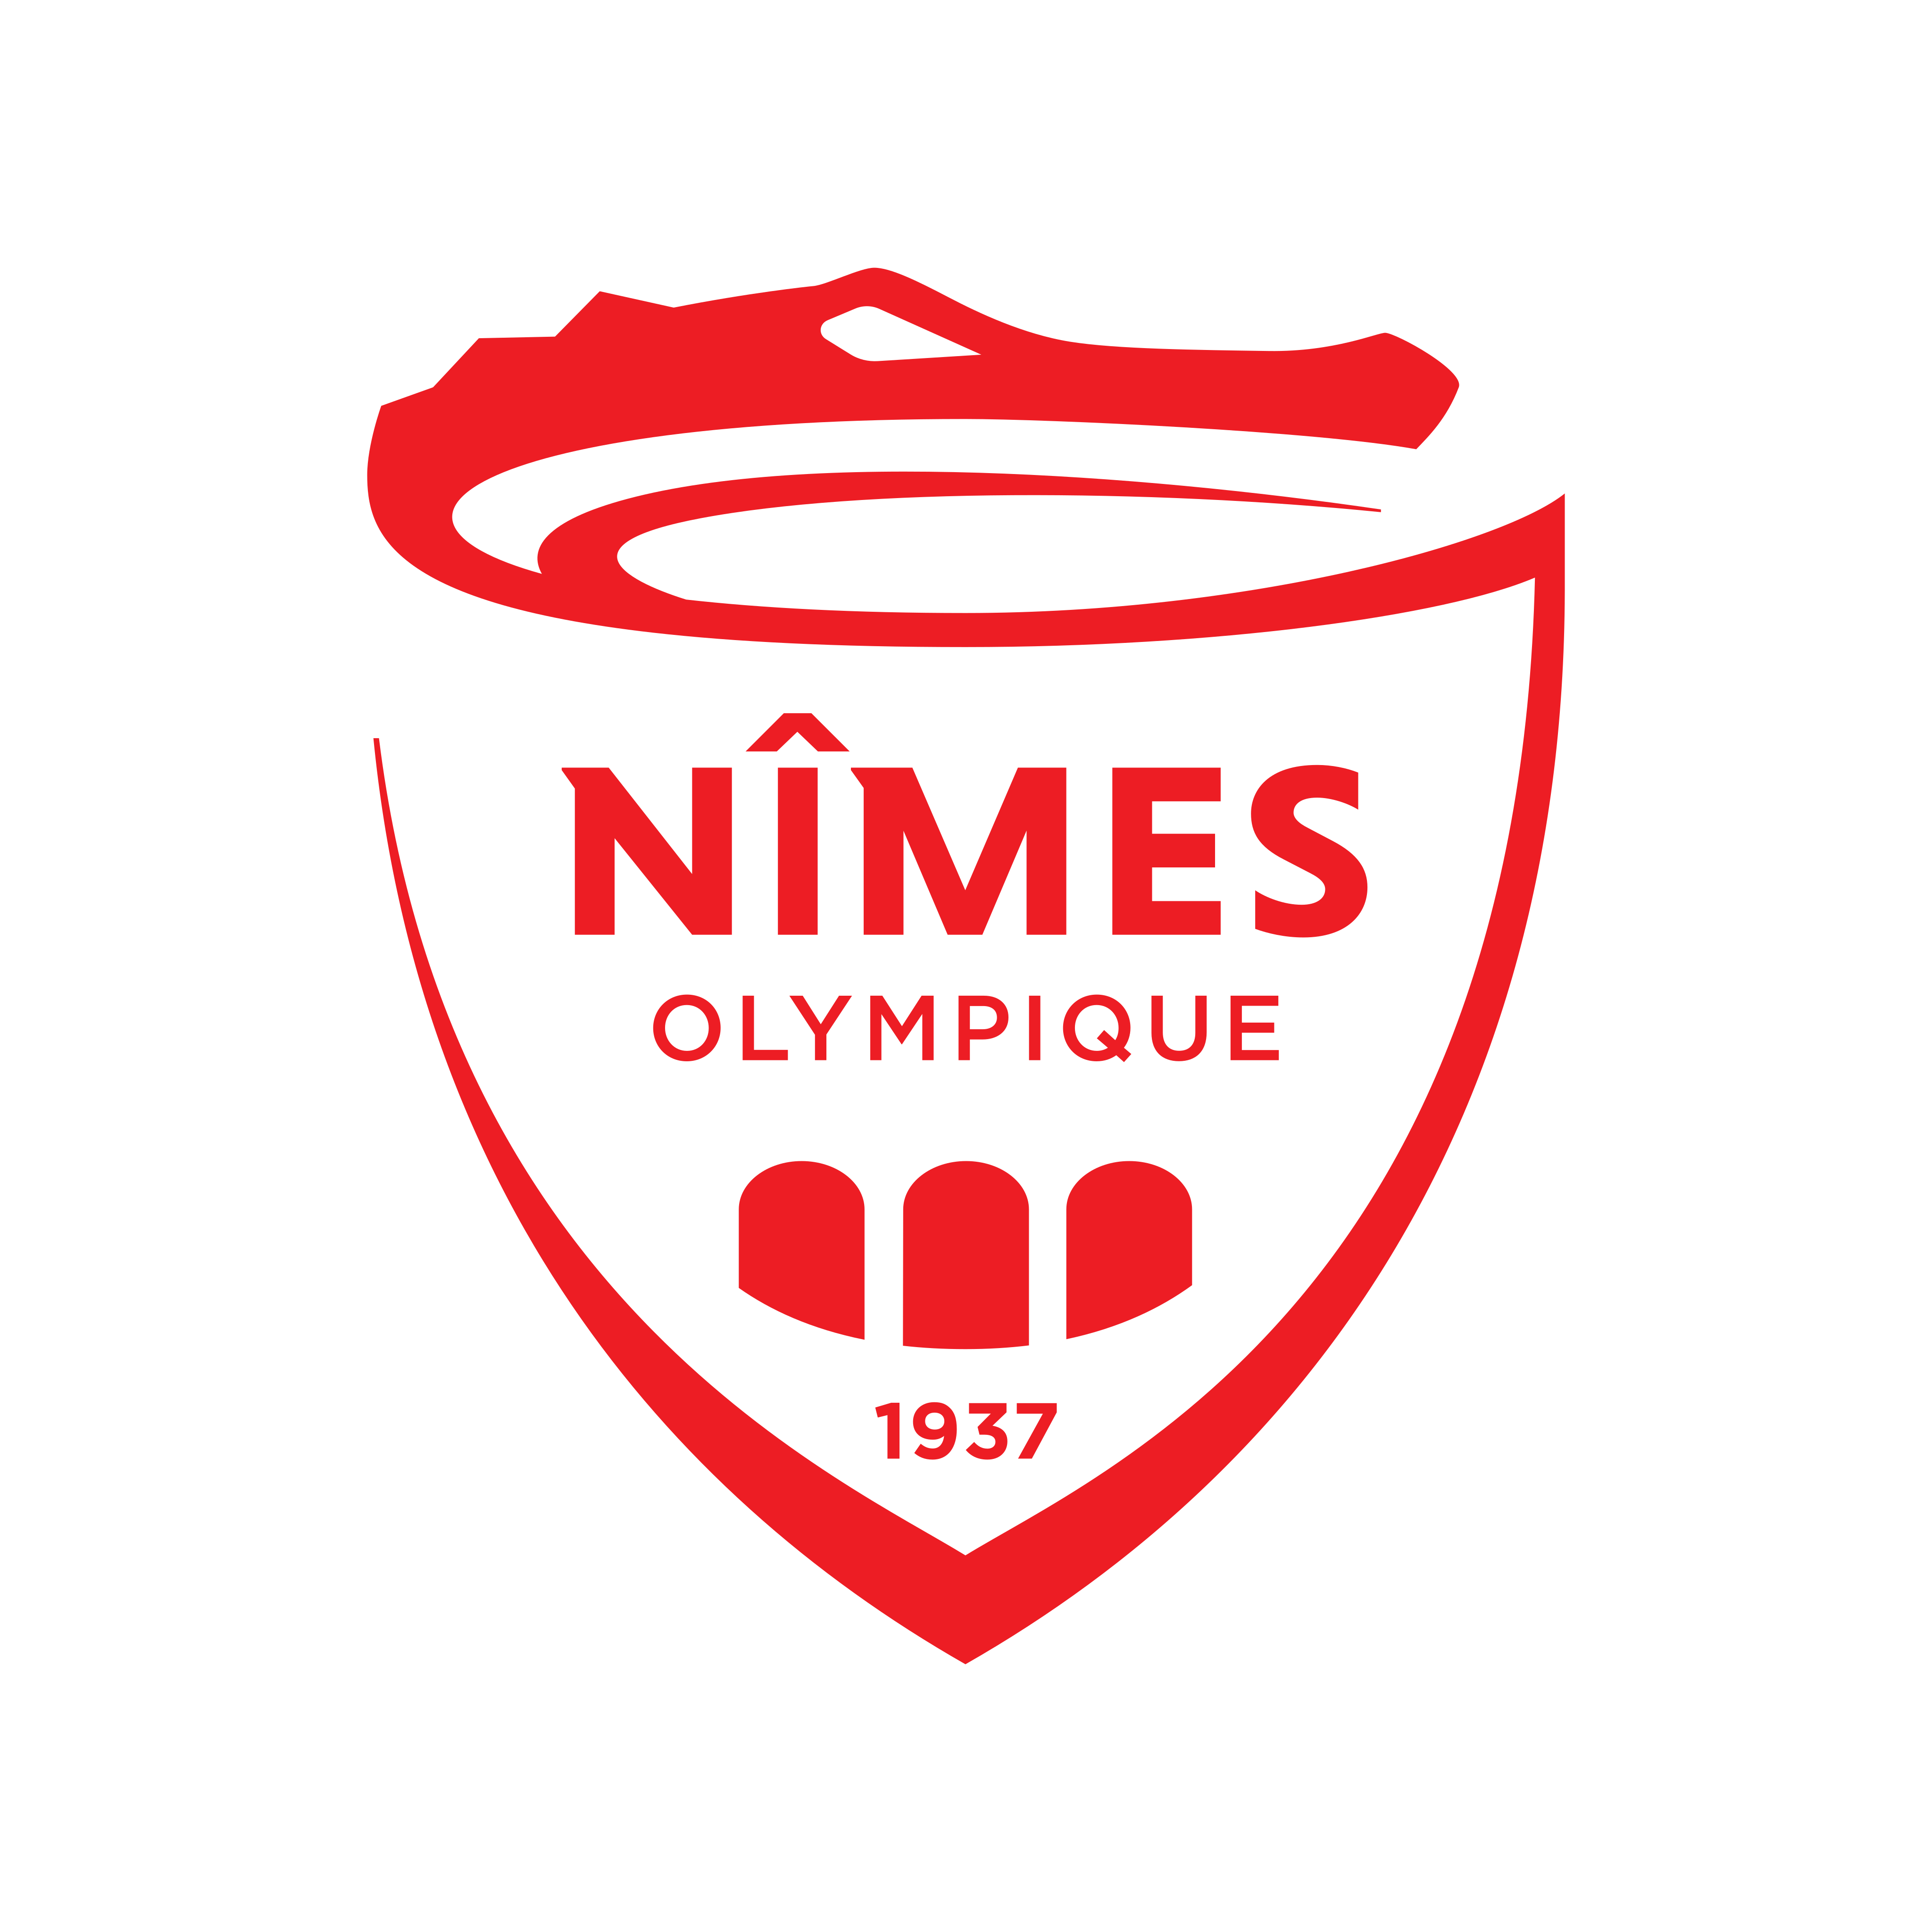 nimes olympique logo 0 - Nîmes Olympique Logo